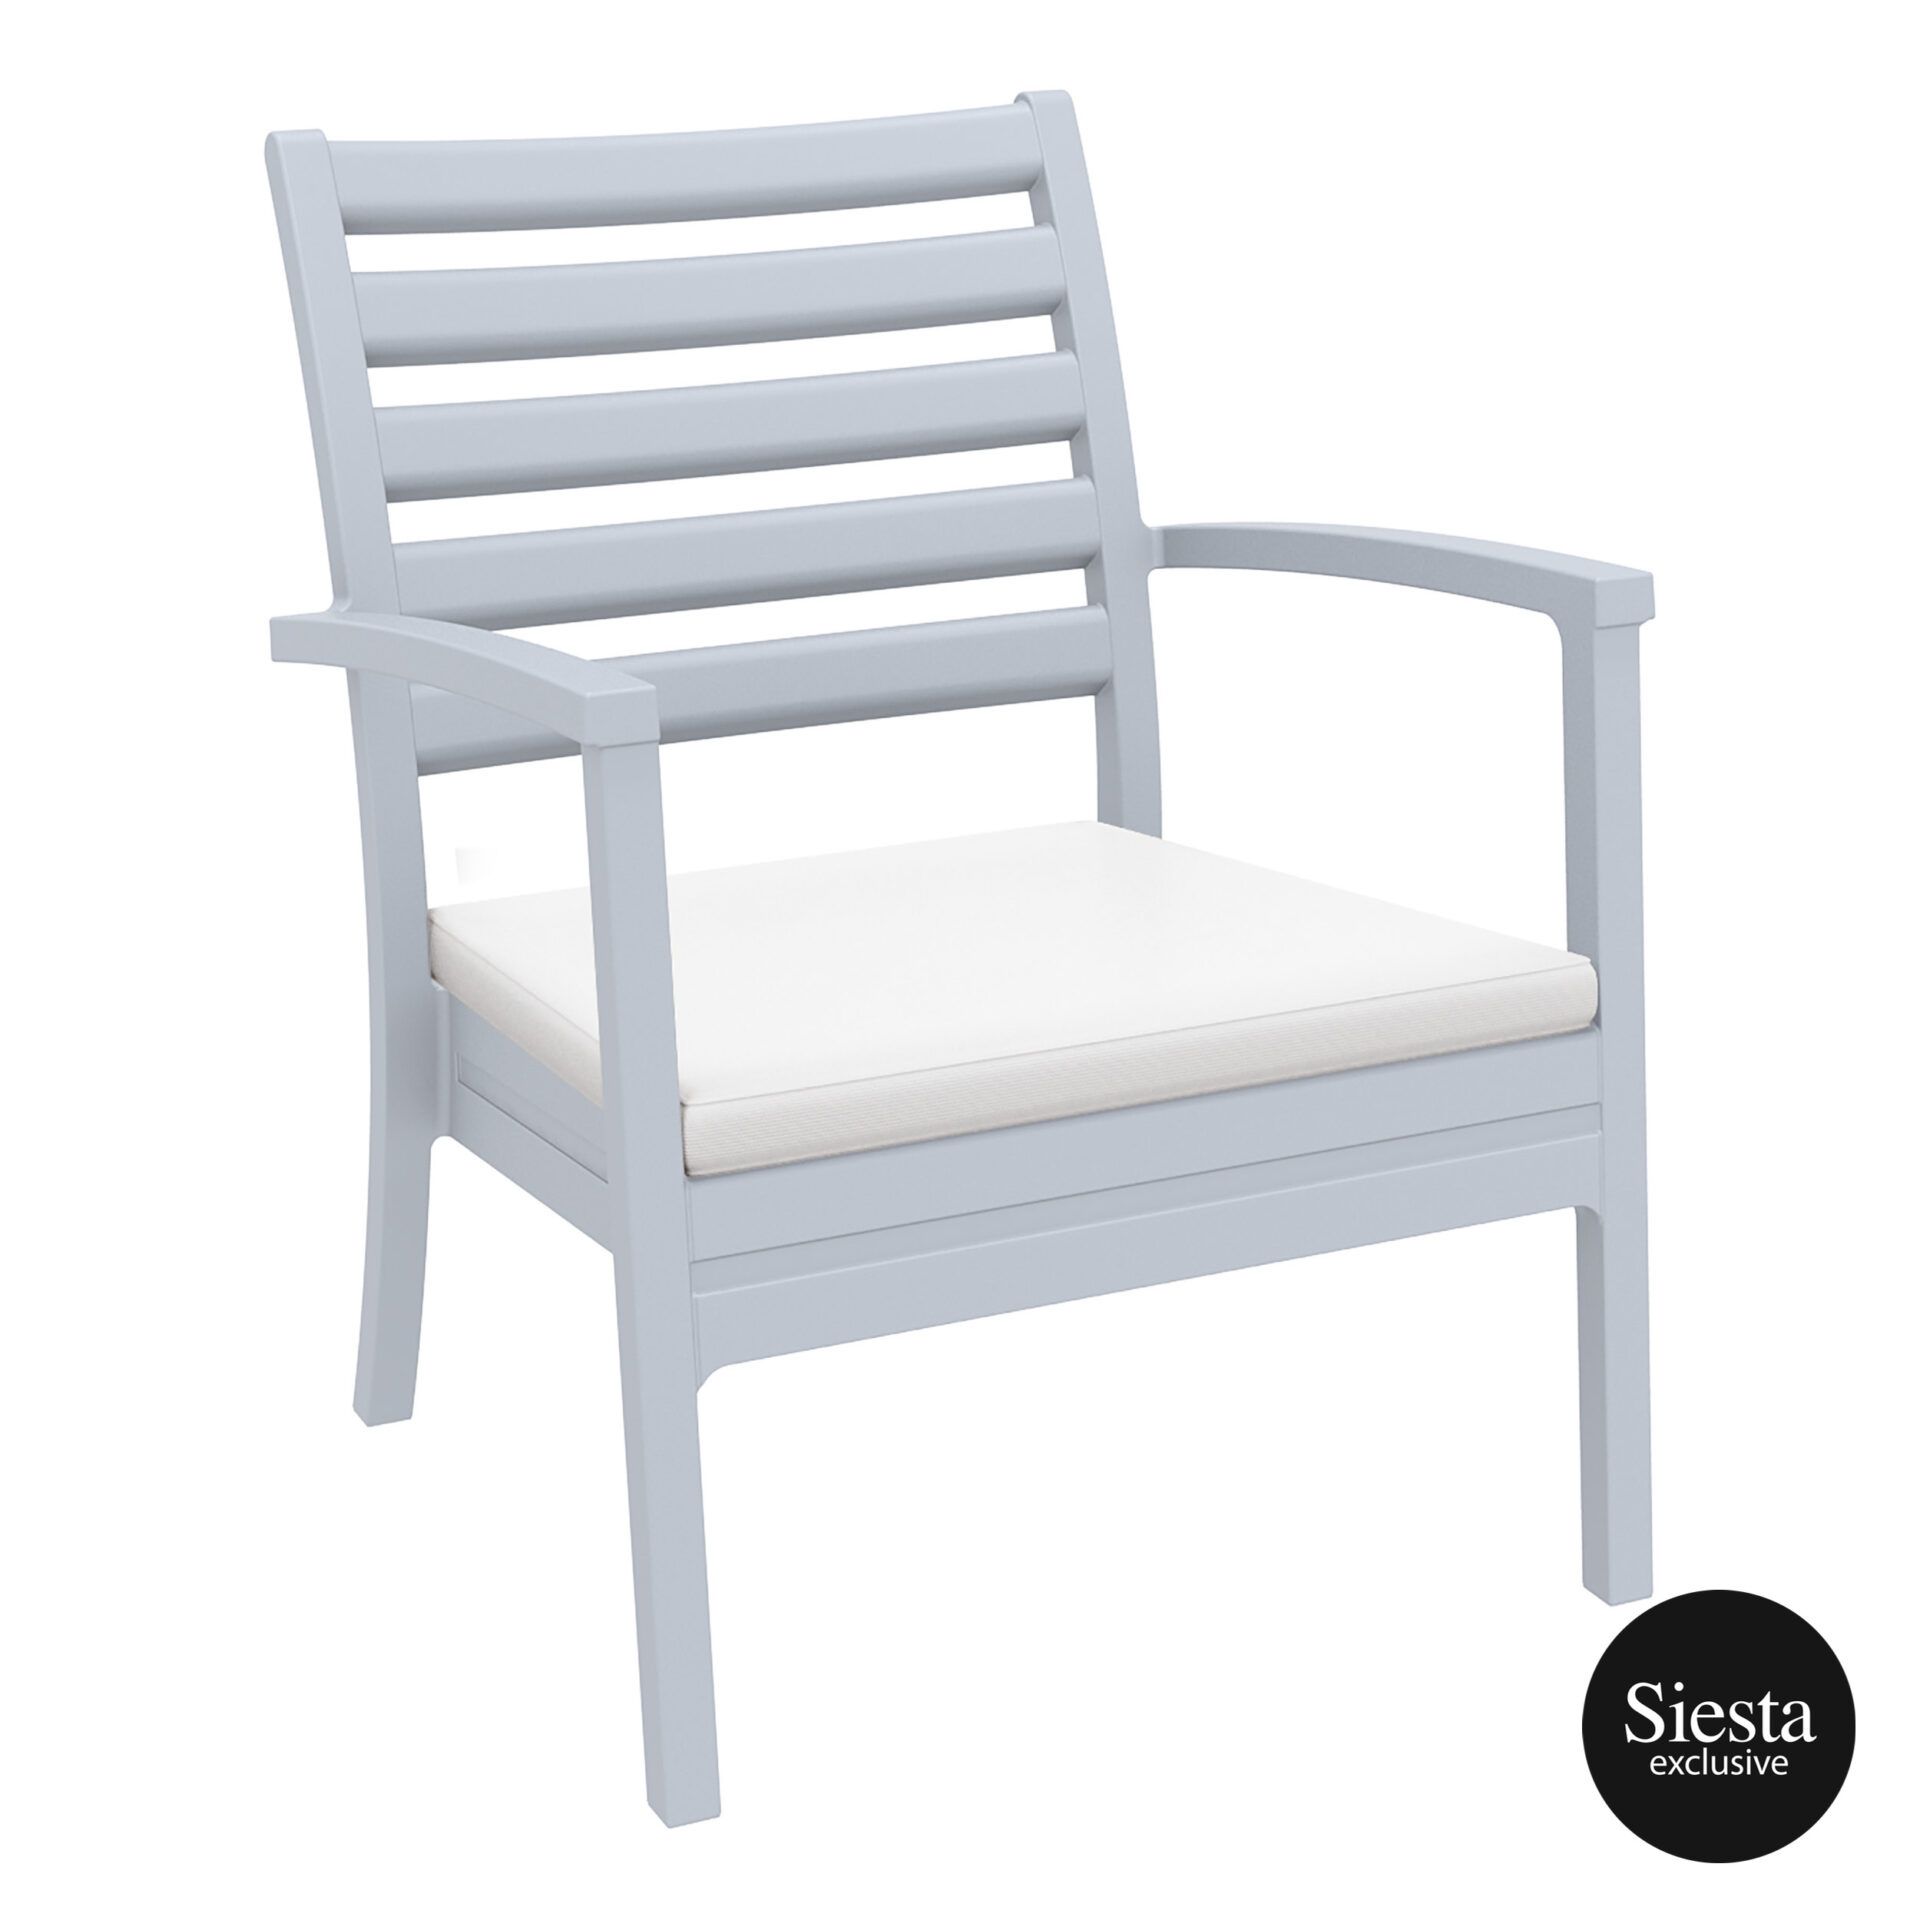 Artemis Xl Seat Cushion white silvergrey front side